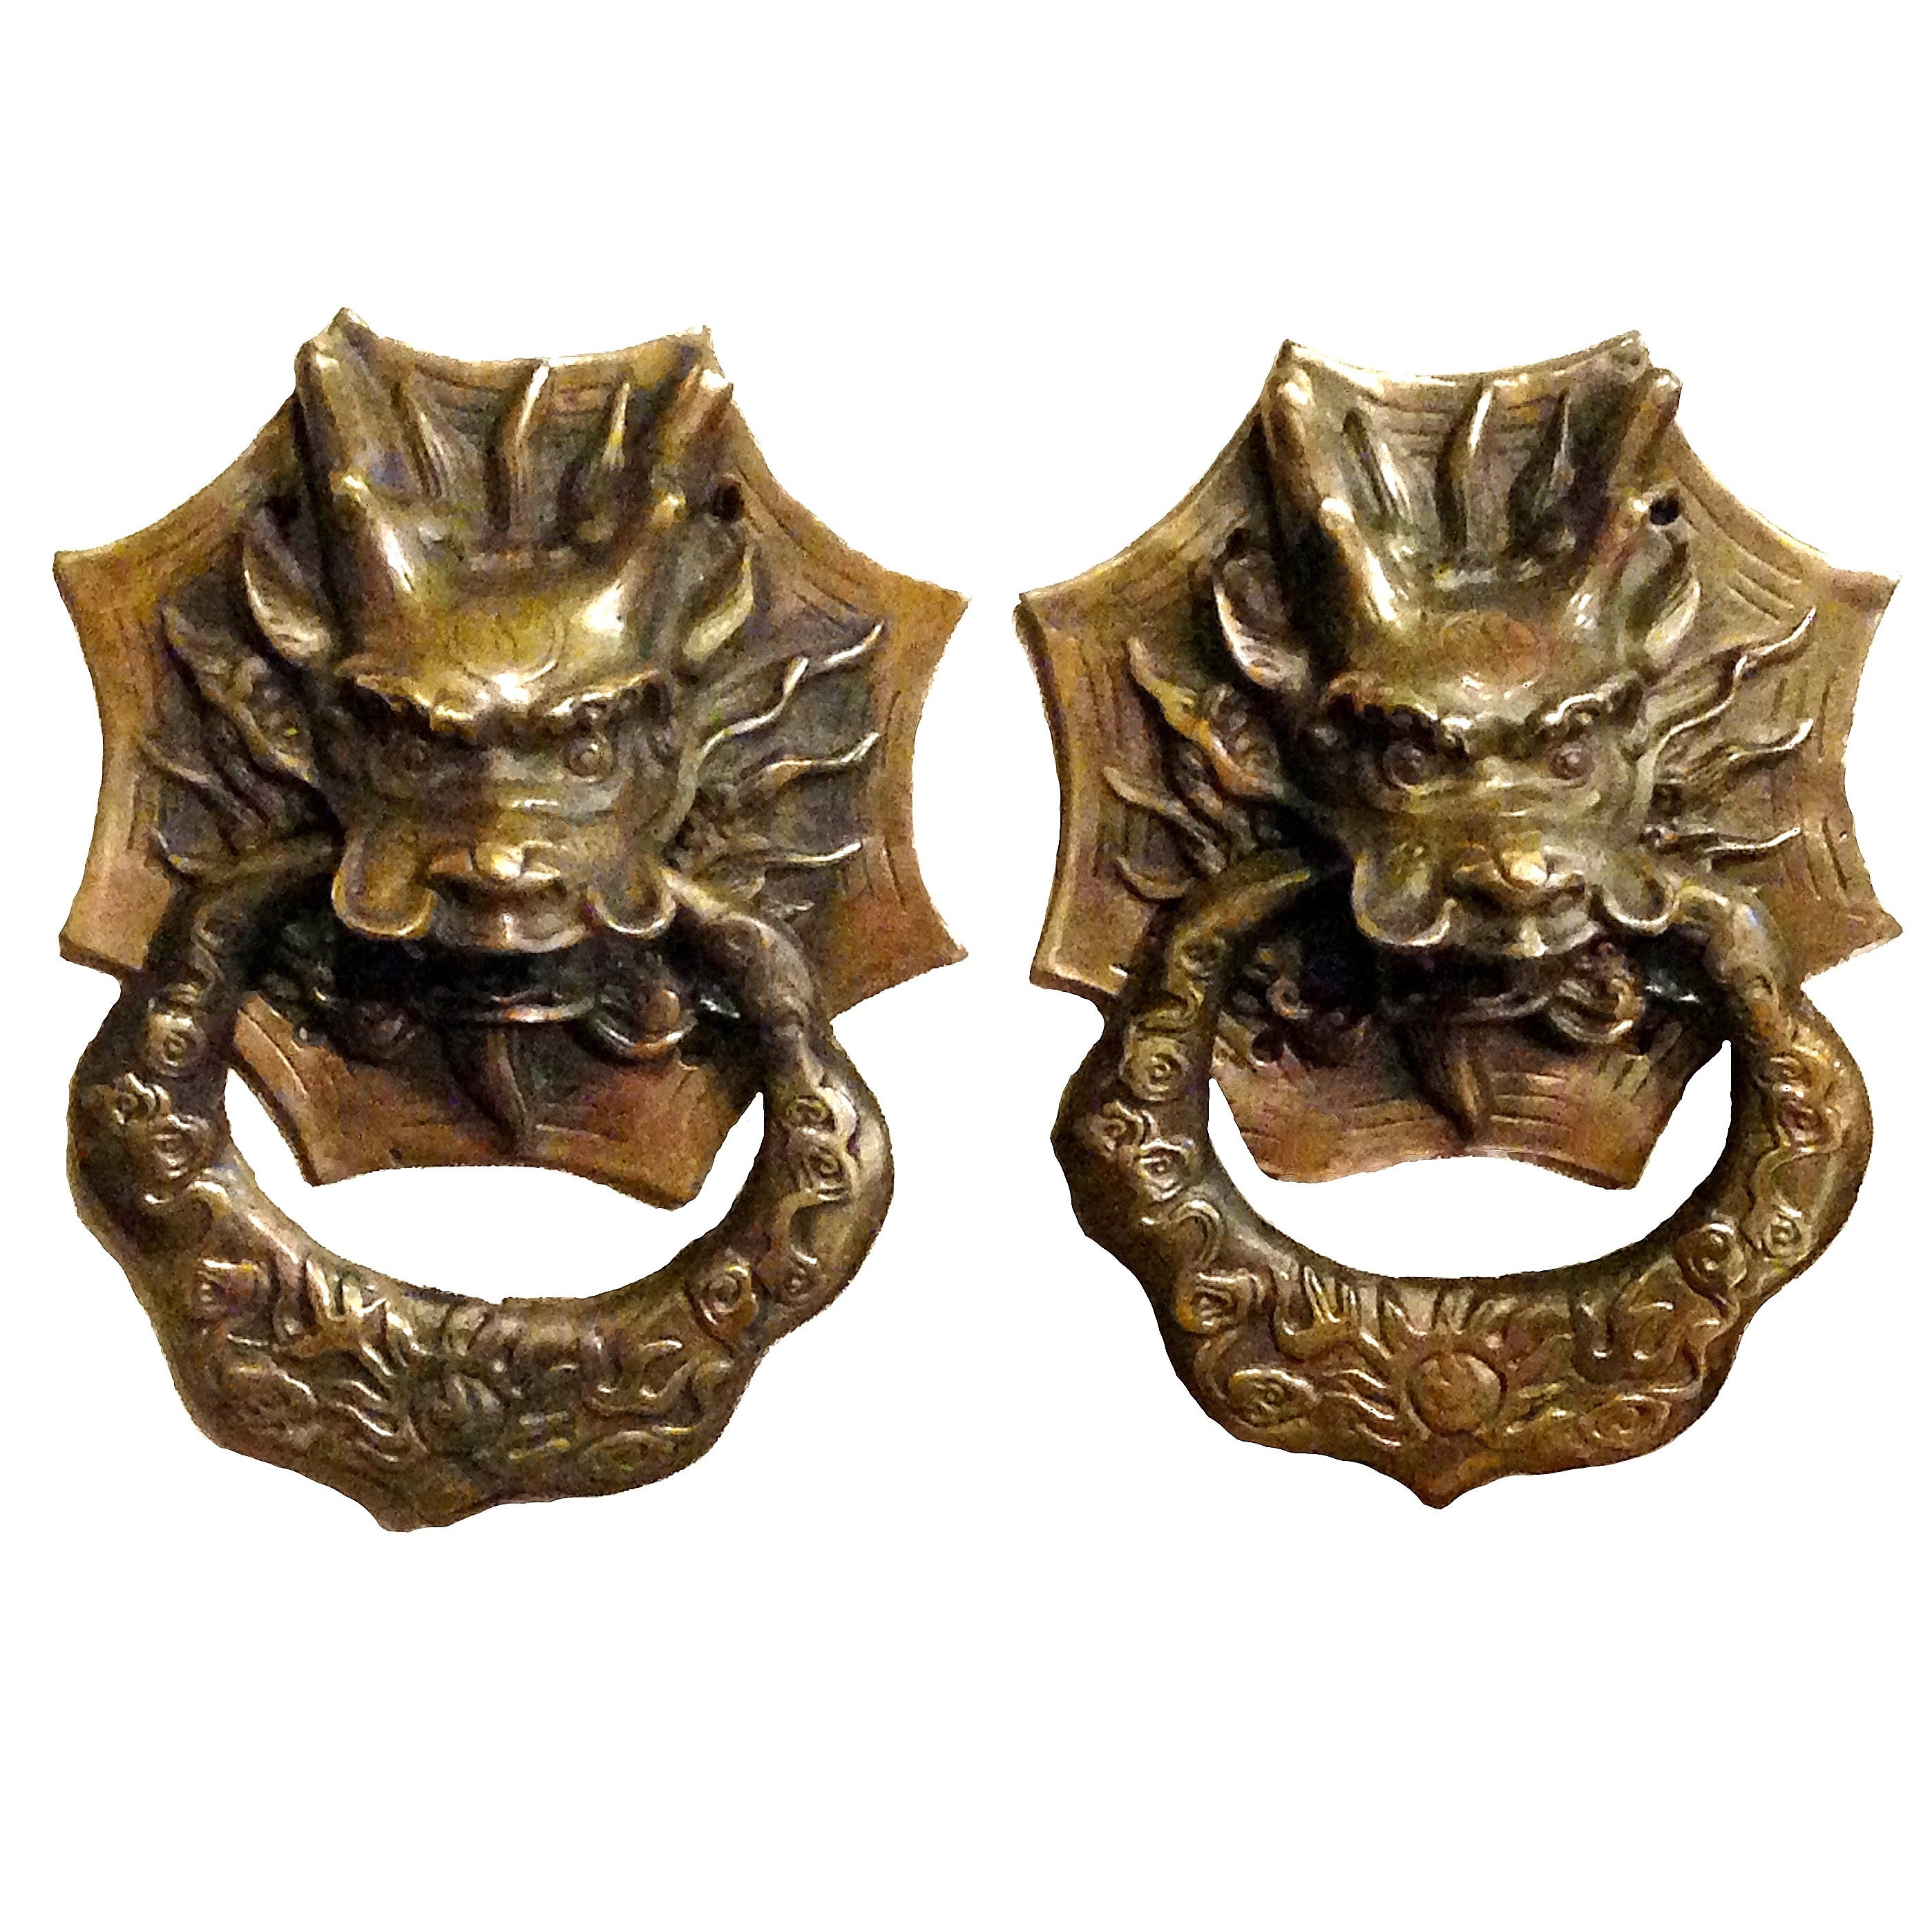 Pair of Brass Dragon Chinese Door Knockers or Towel Rings